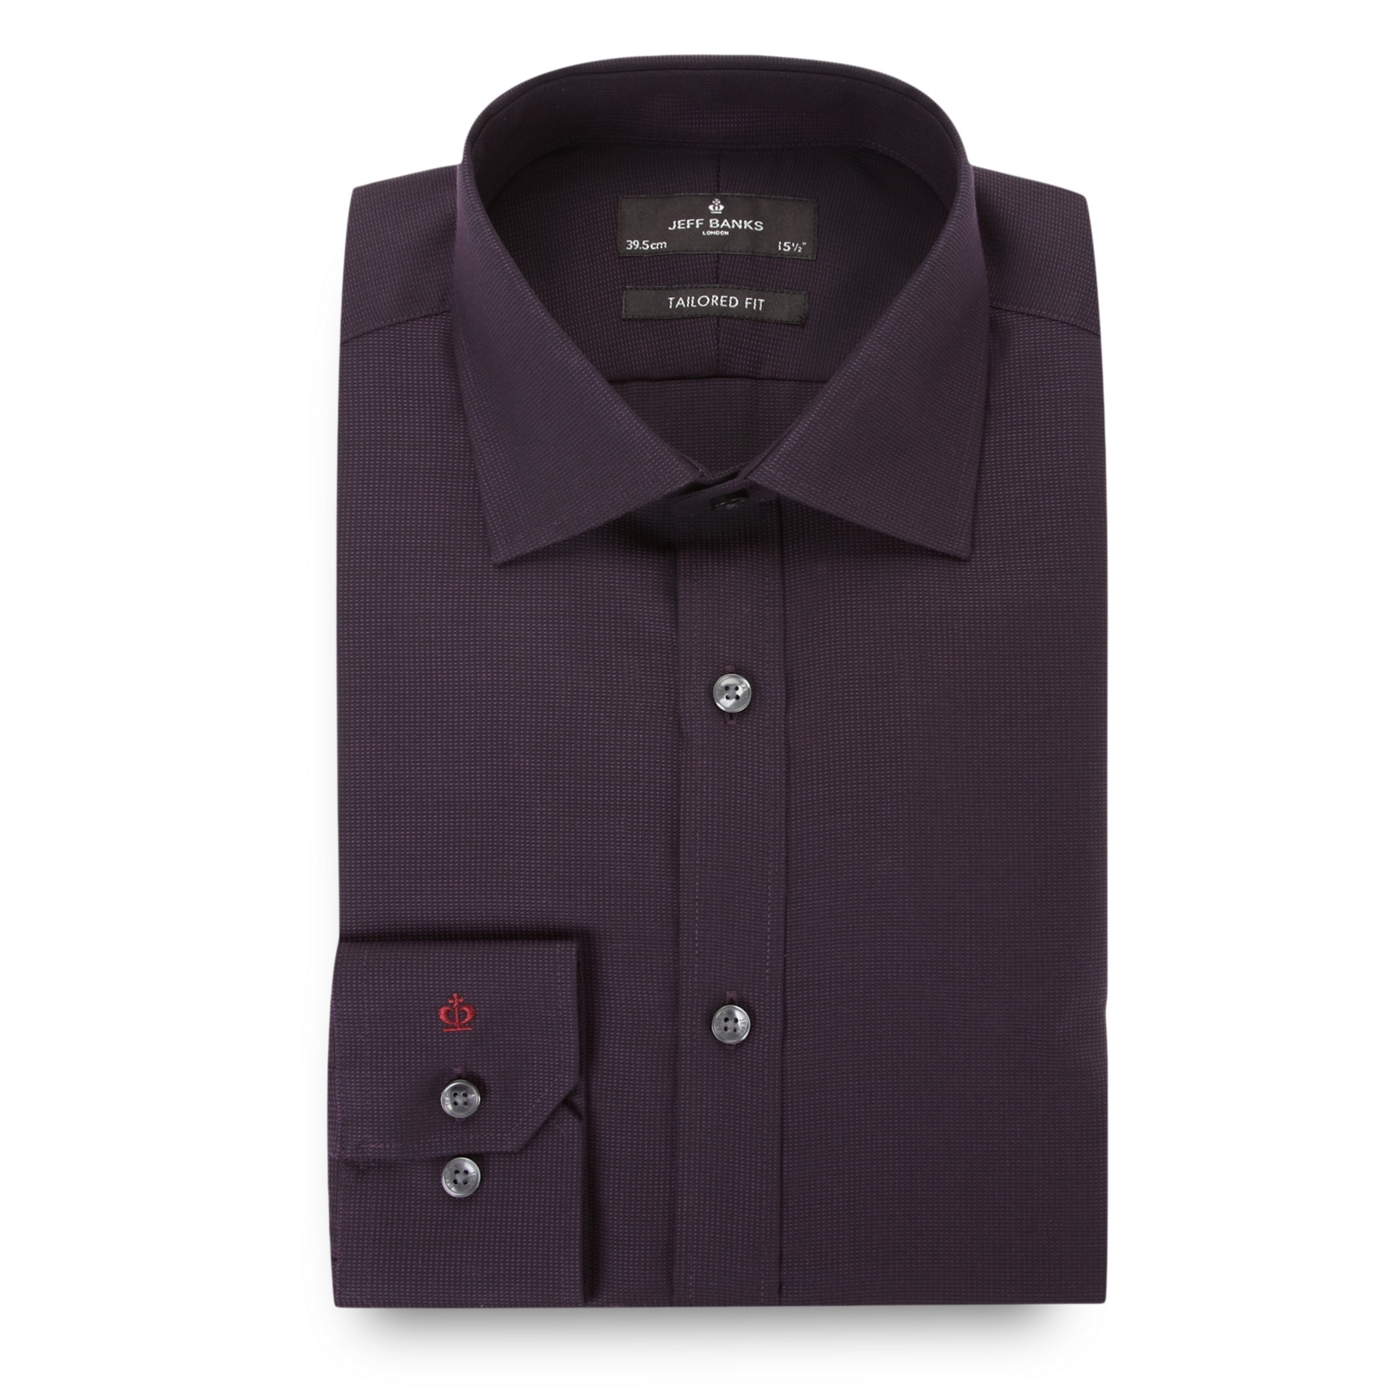 Jeff Banks Designer dark purple textured tailored shirt